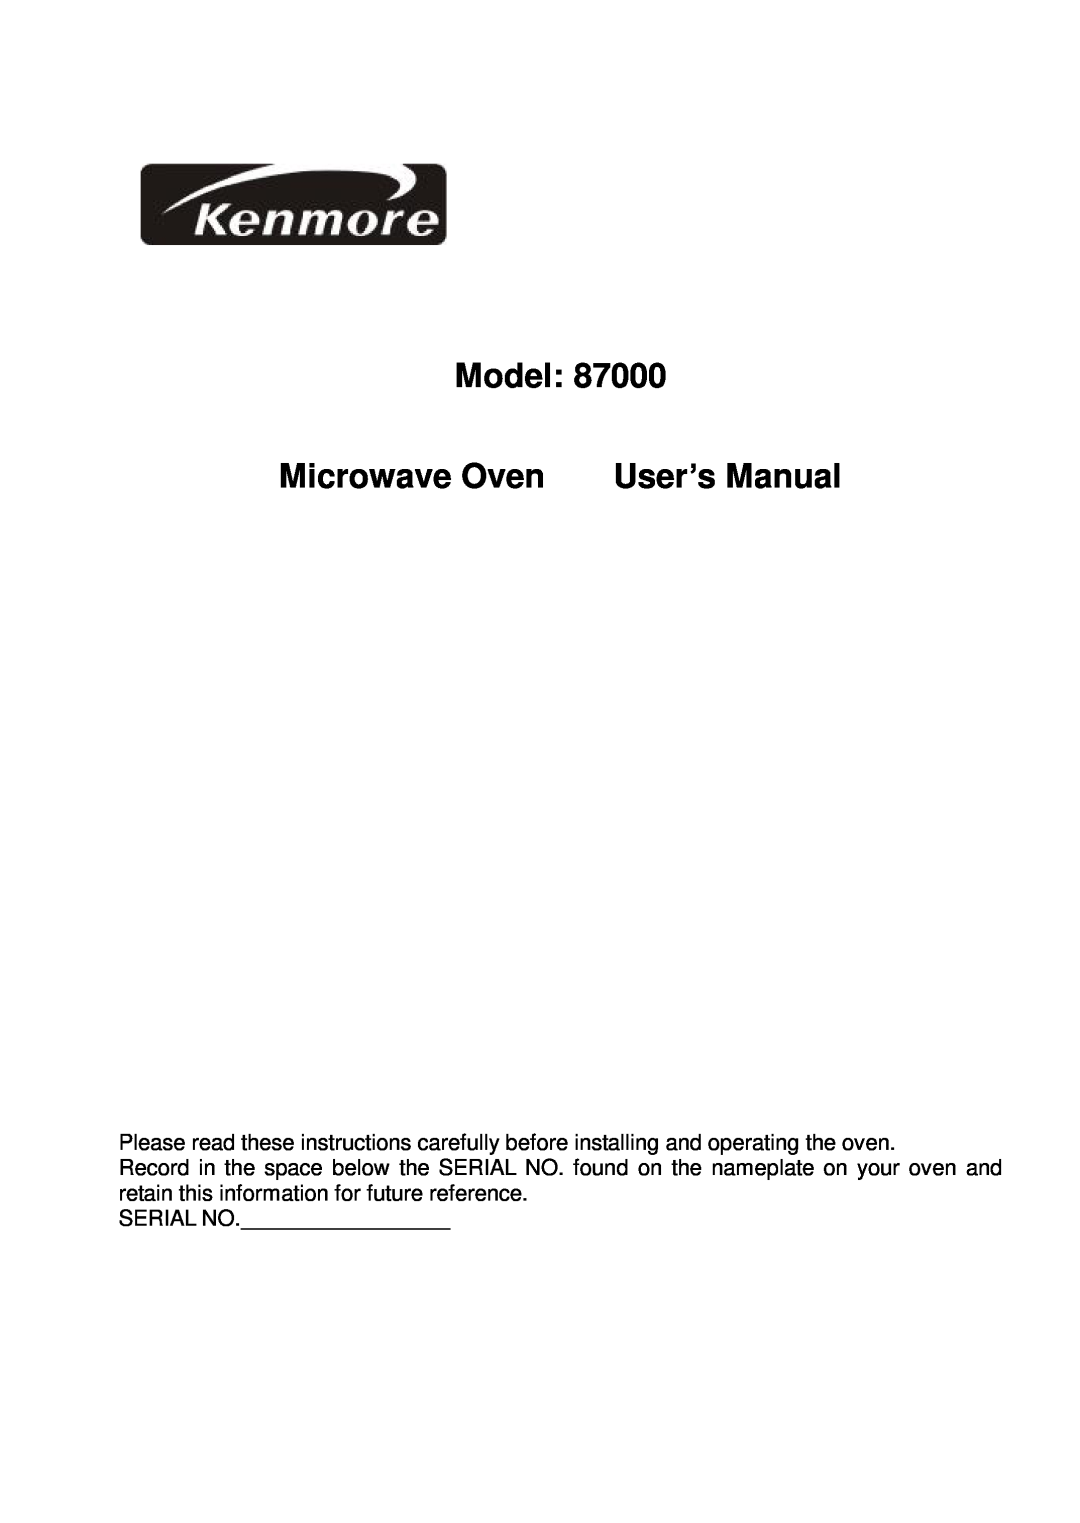 Kenmore 87000 user manual Model, Microwave Oven 